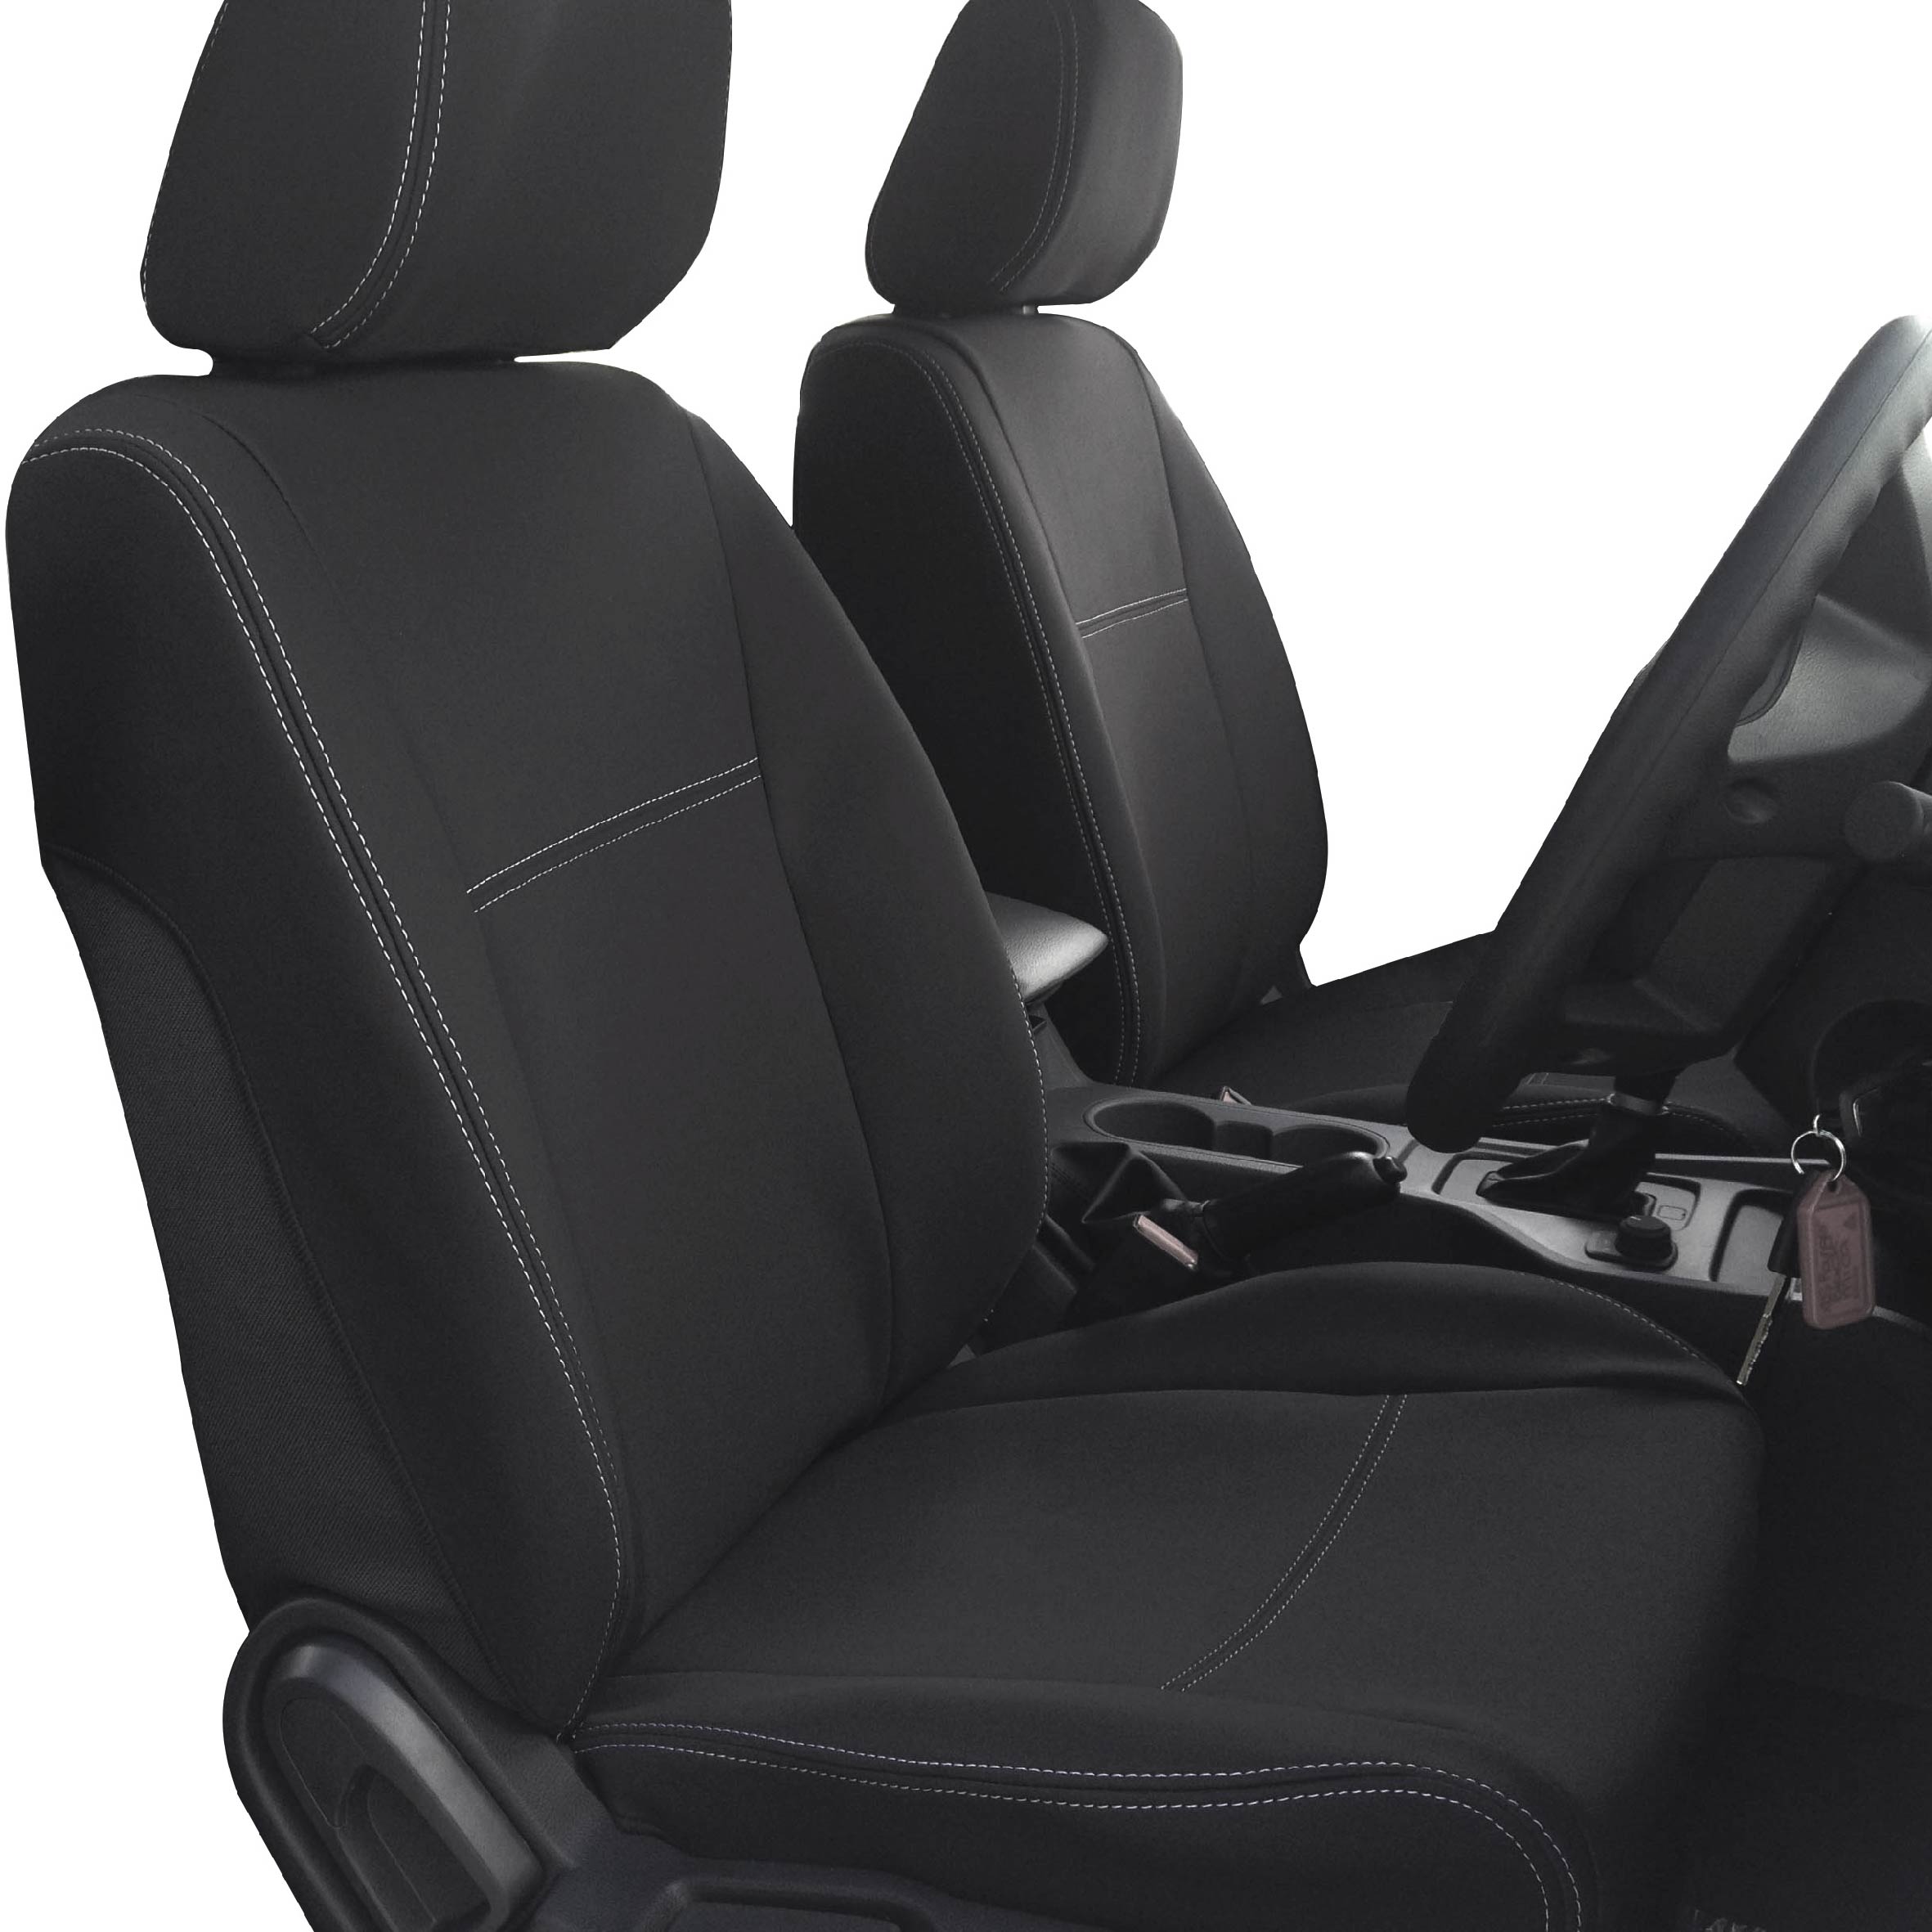 STANDARD Front & REAR Seat Covers for Mazda BT-50 (MBT11-HB+R) - Dingo  Trails